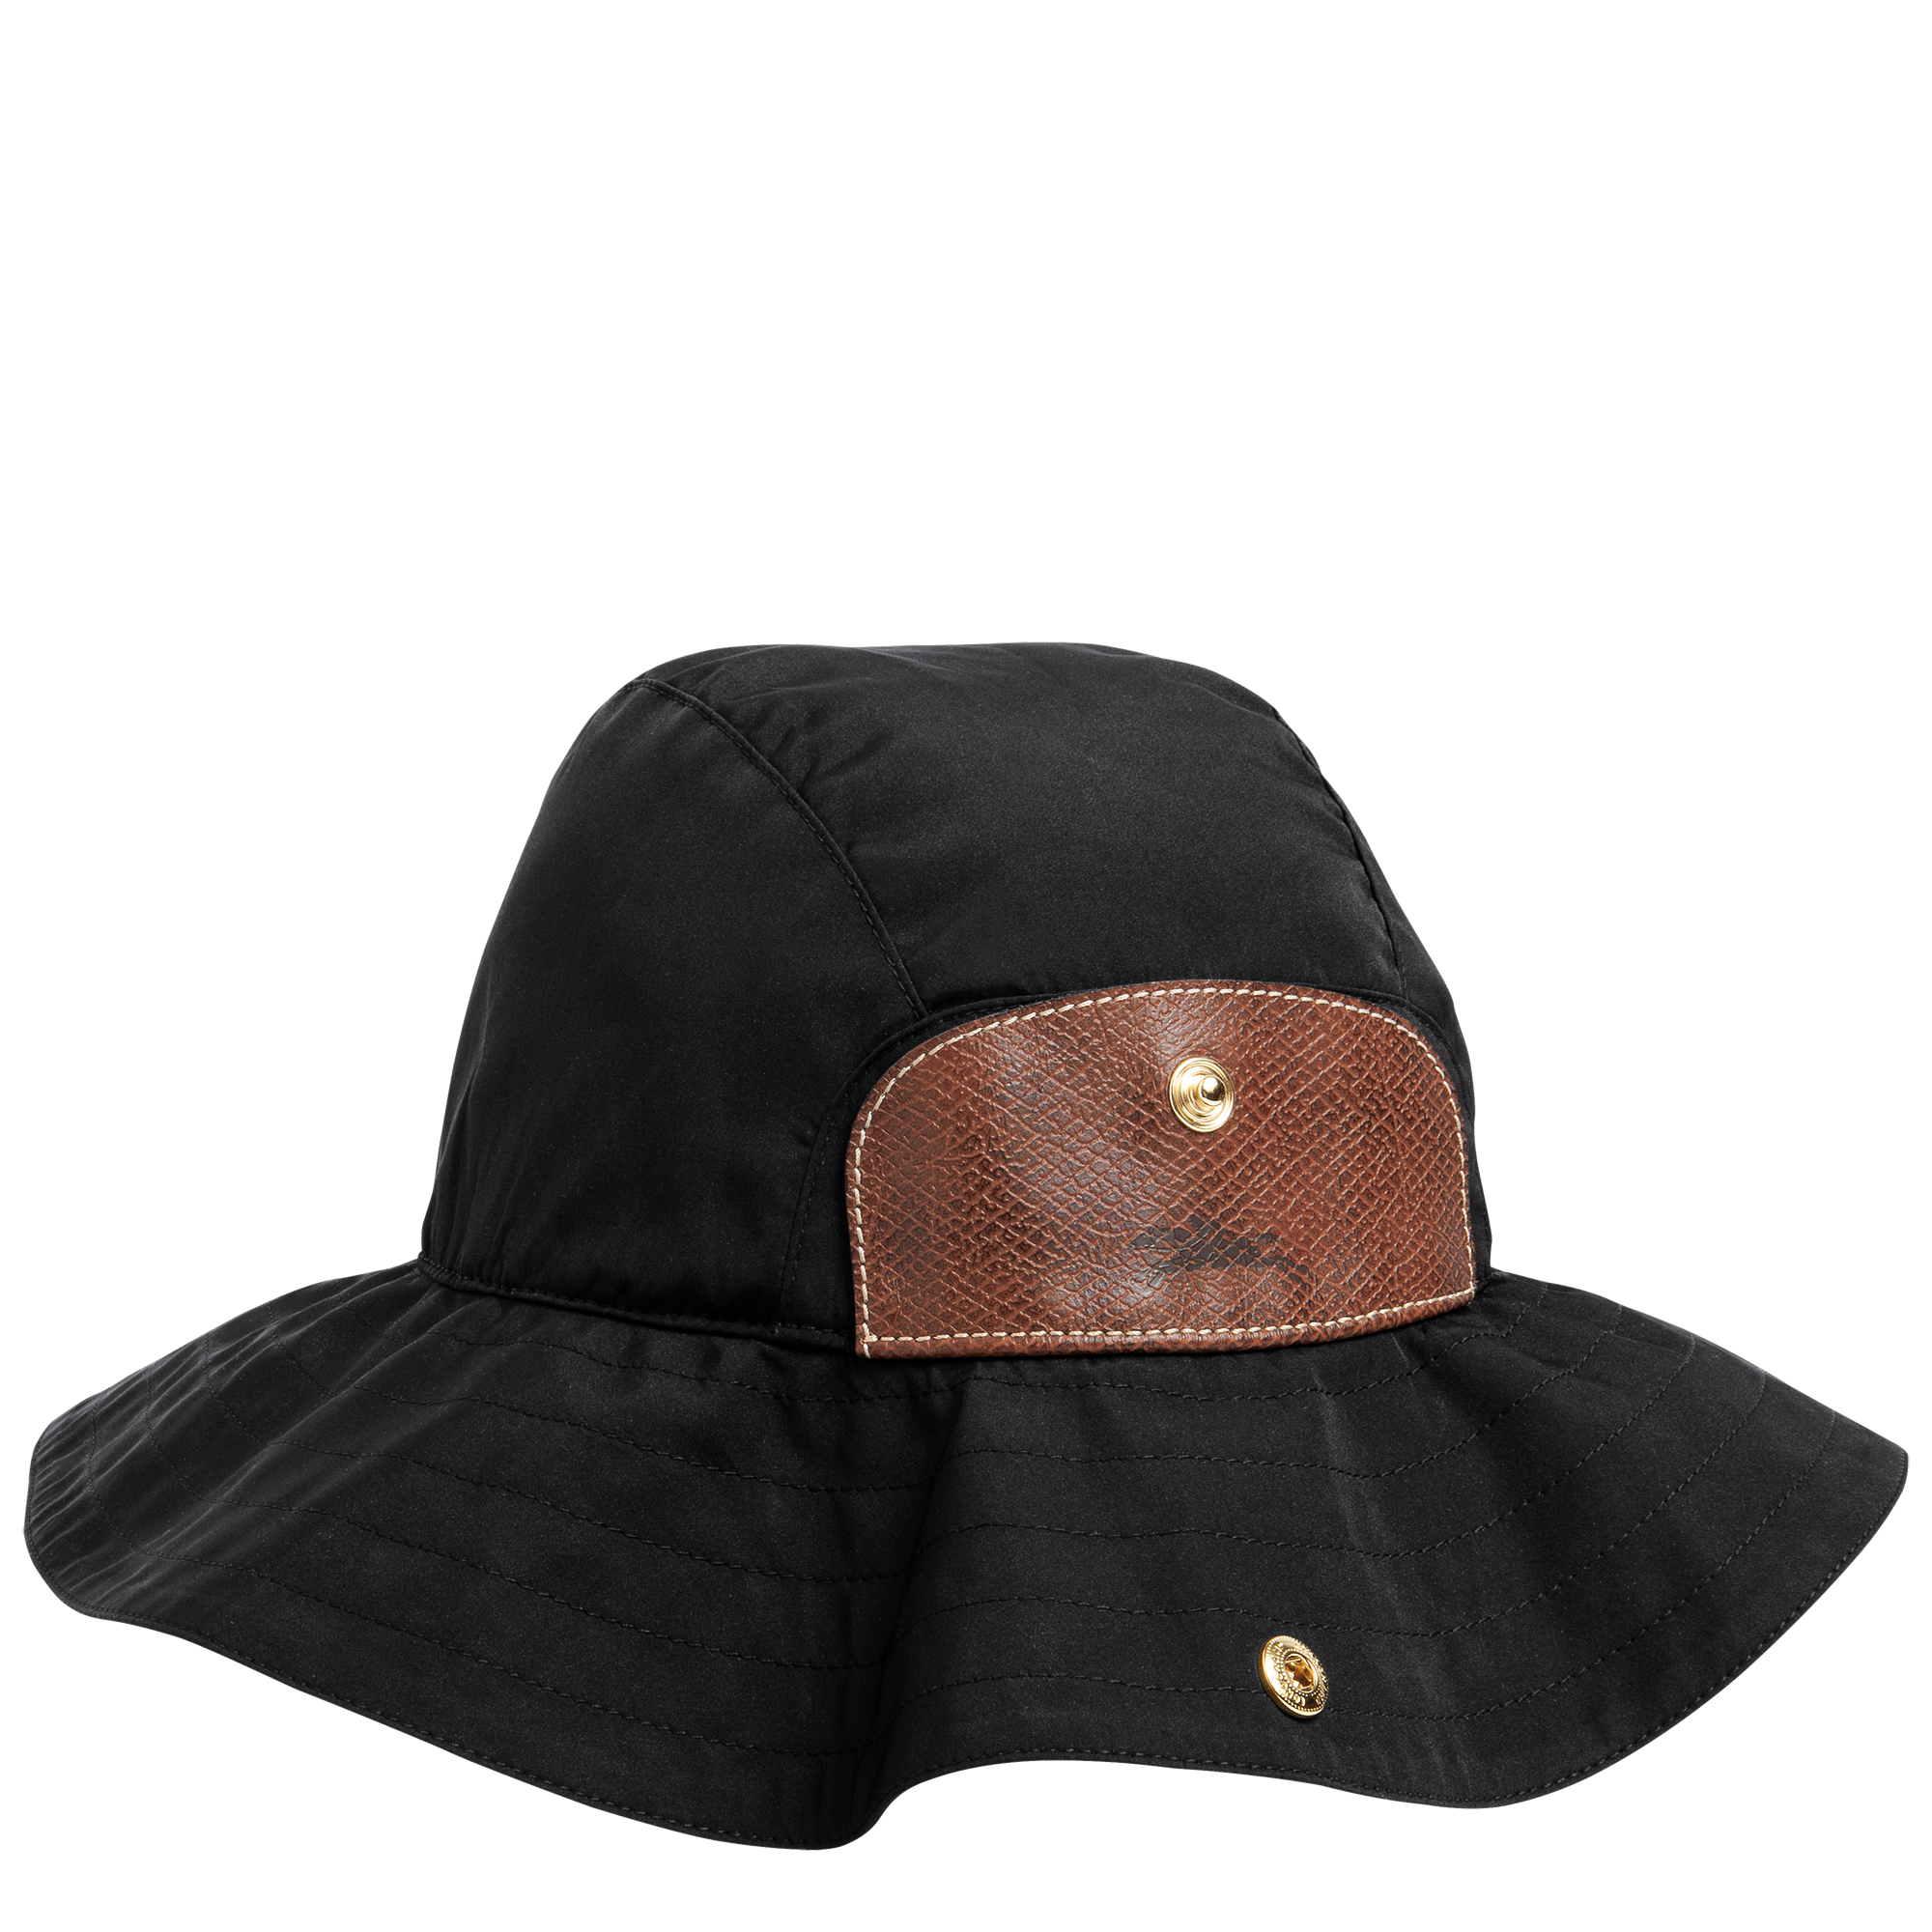 Longchamp X D_heygere black hat Php 18,000.png